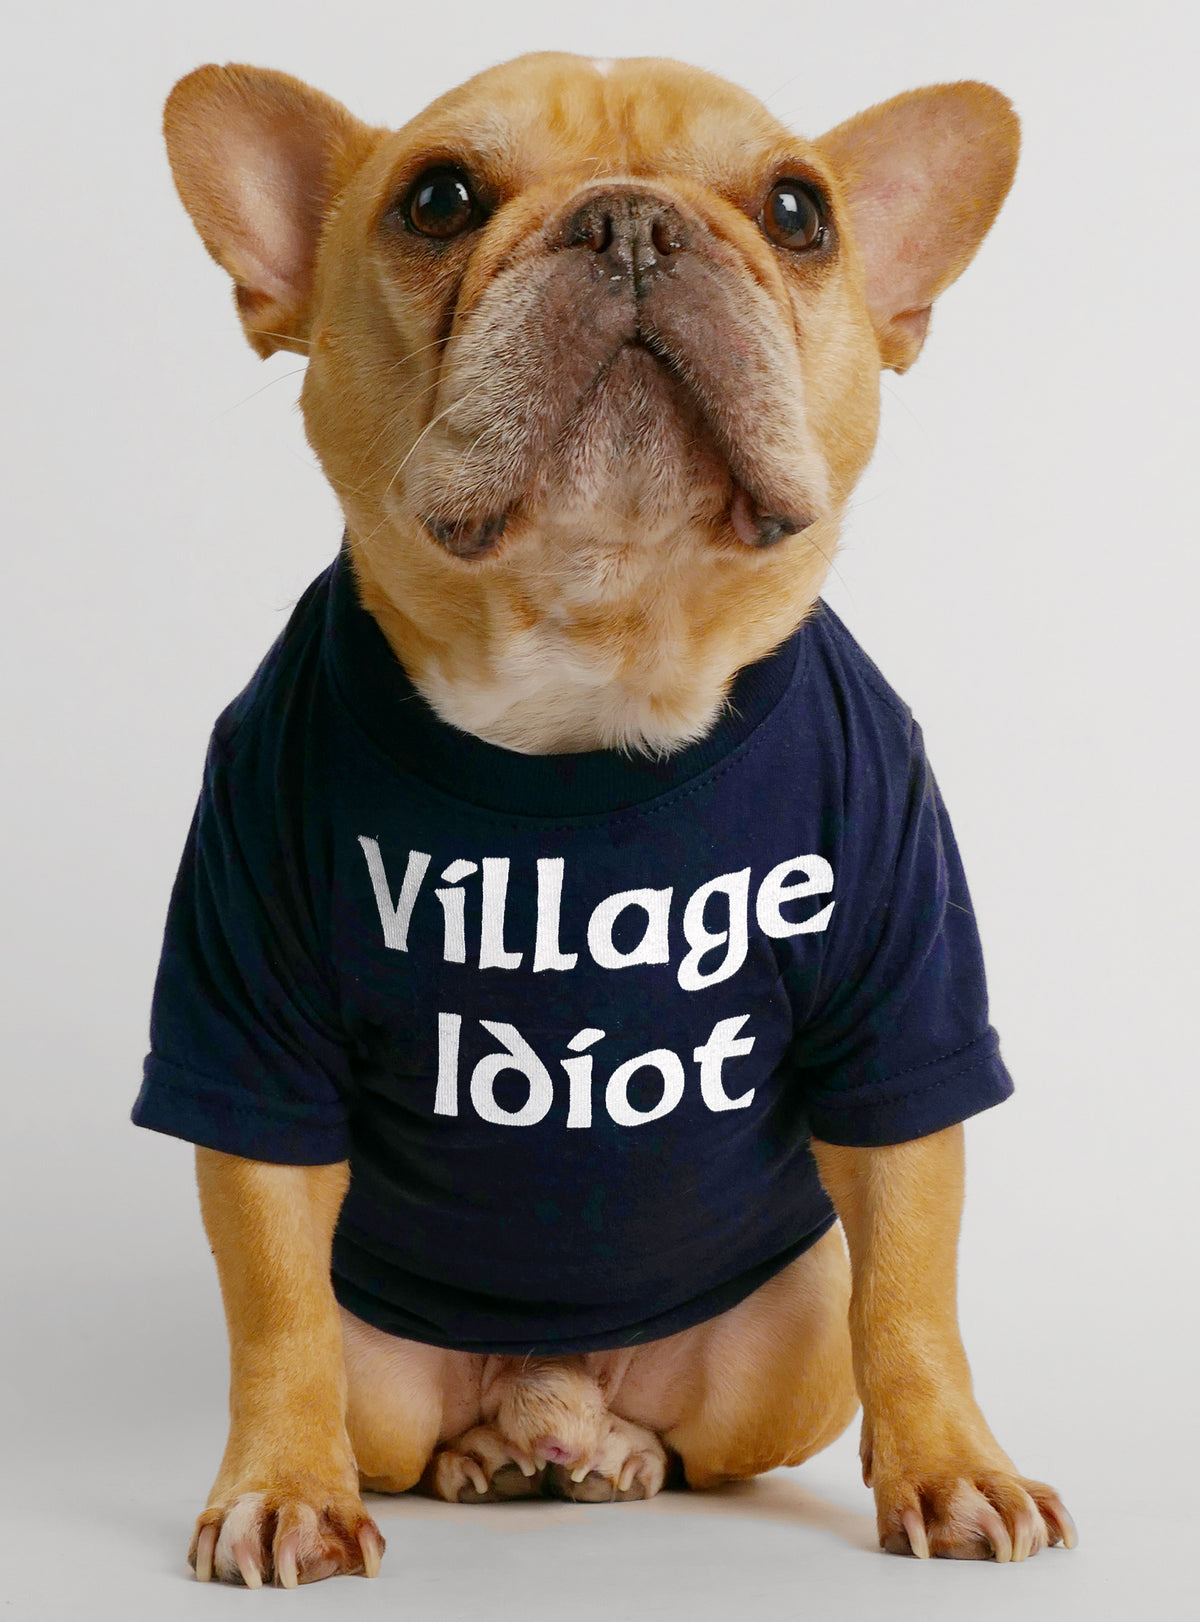 Village Idiot + Town Crier (2-Pack) Dog Tee